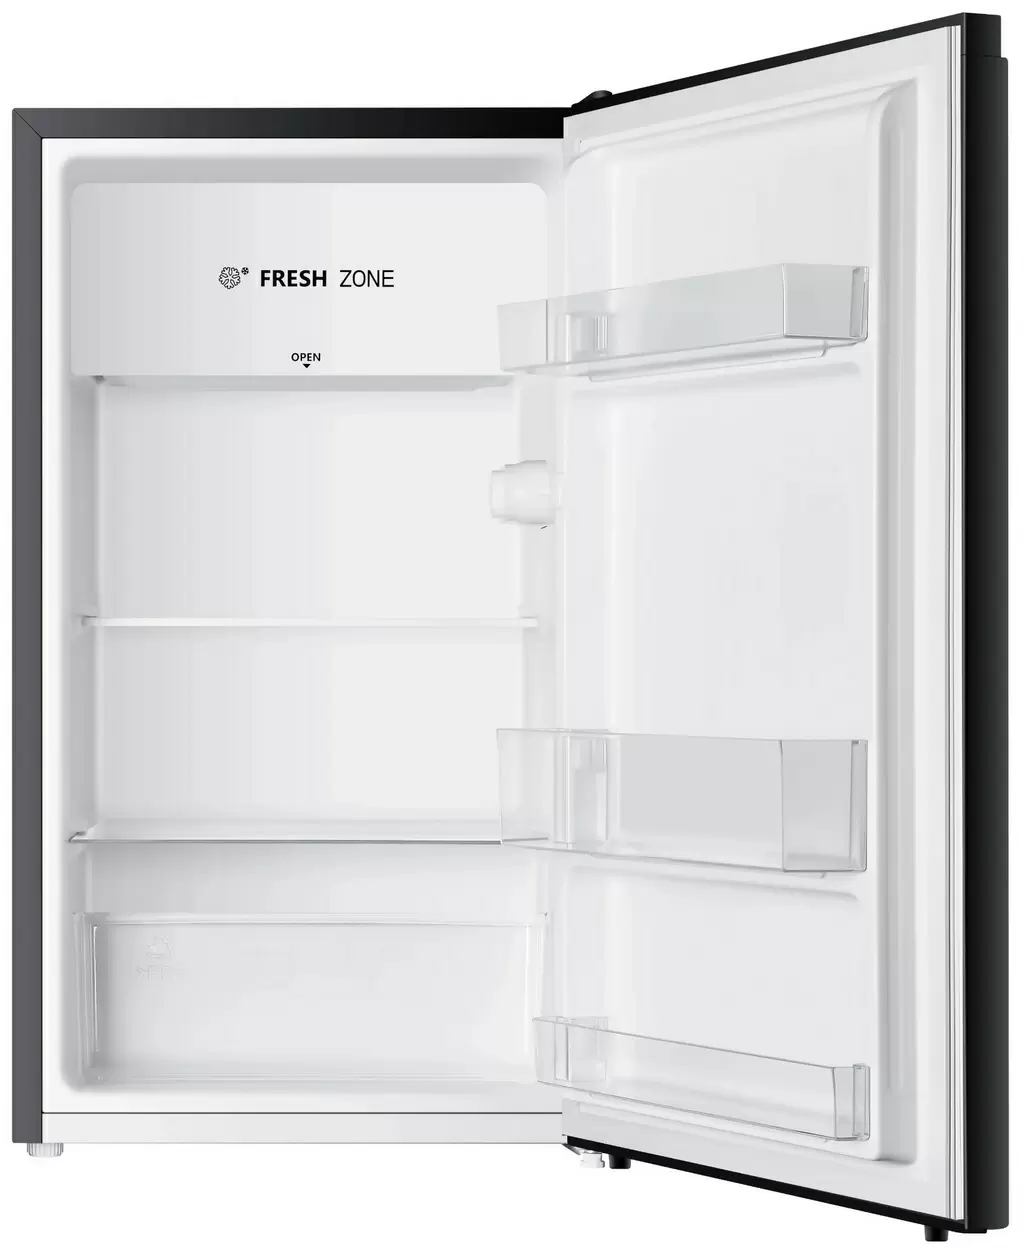 Холодильник Hisense RR121D4ABF, черный